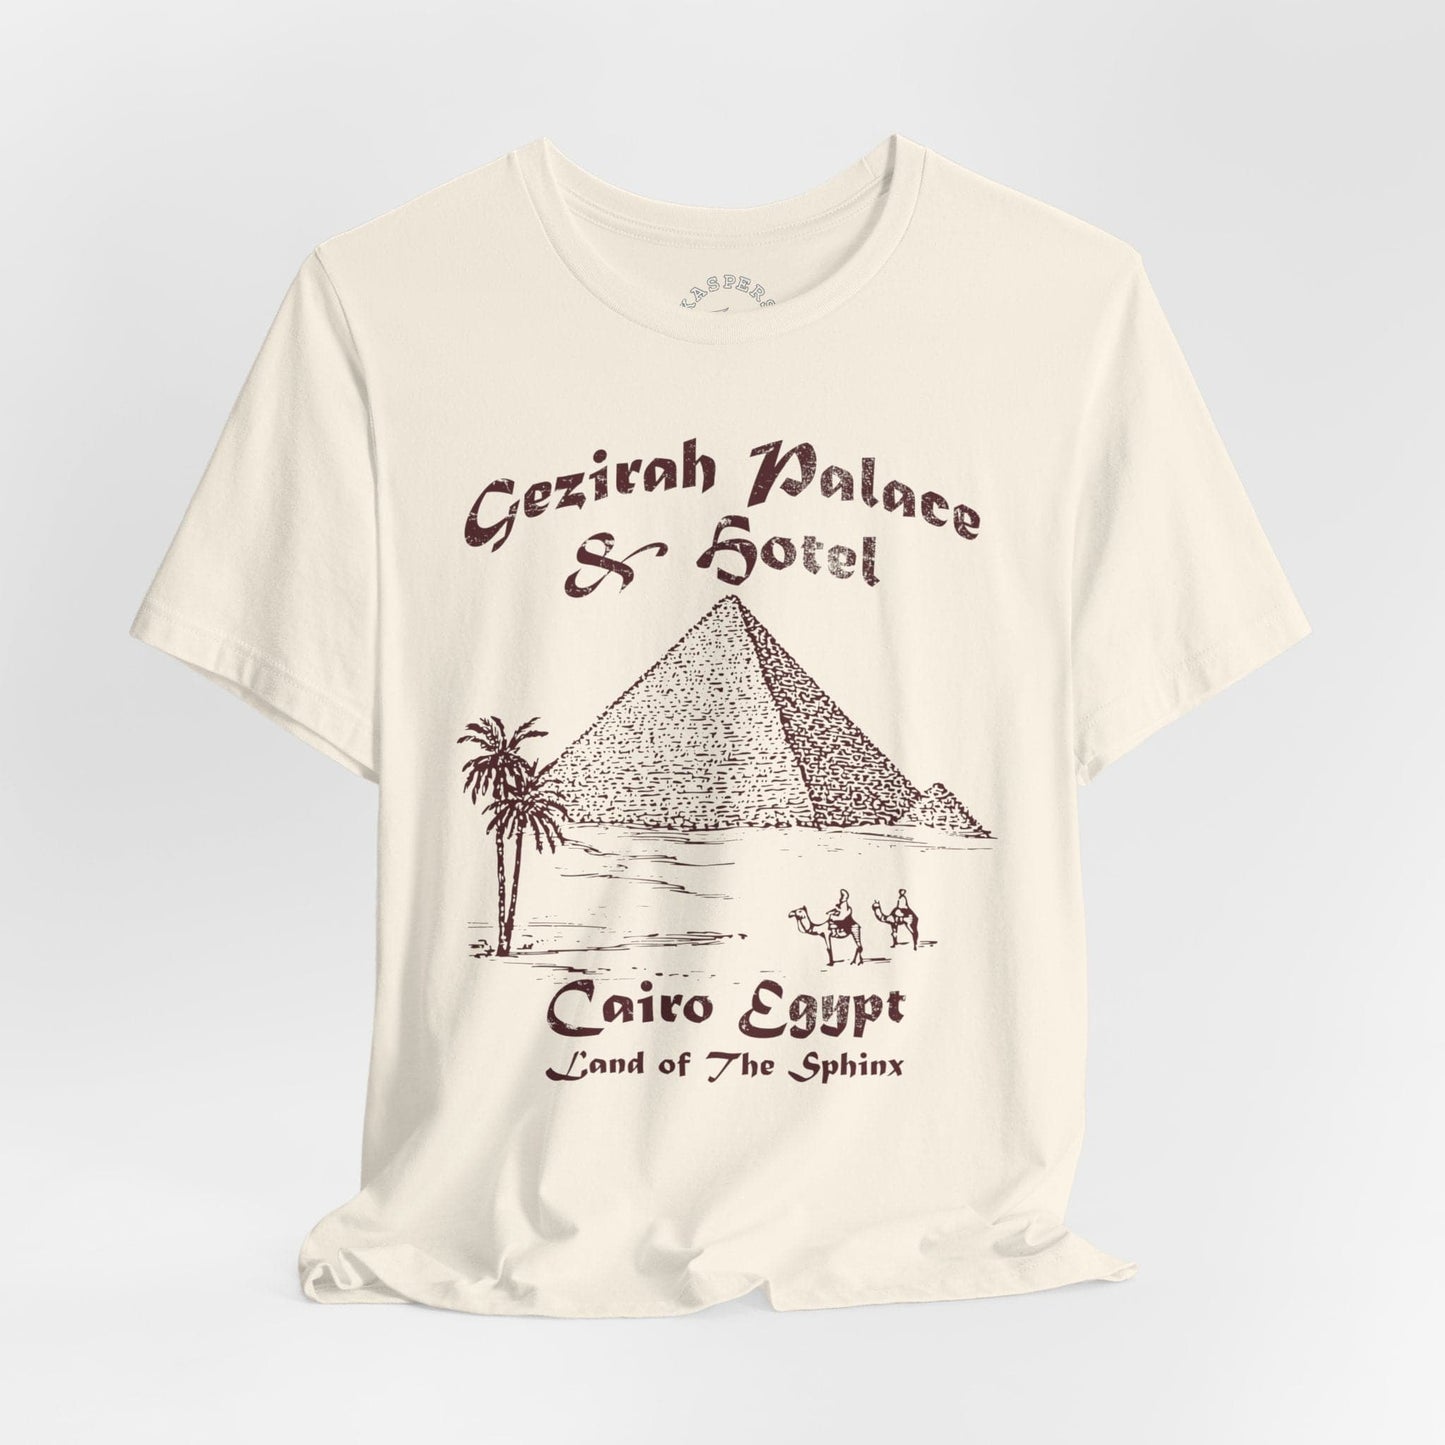 Gezirah Palace & Hotel – Cairo Egypt T-Shirt